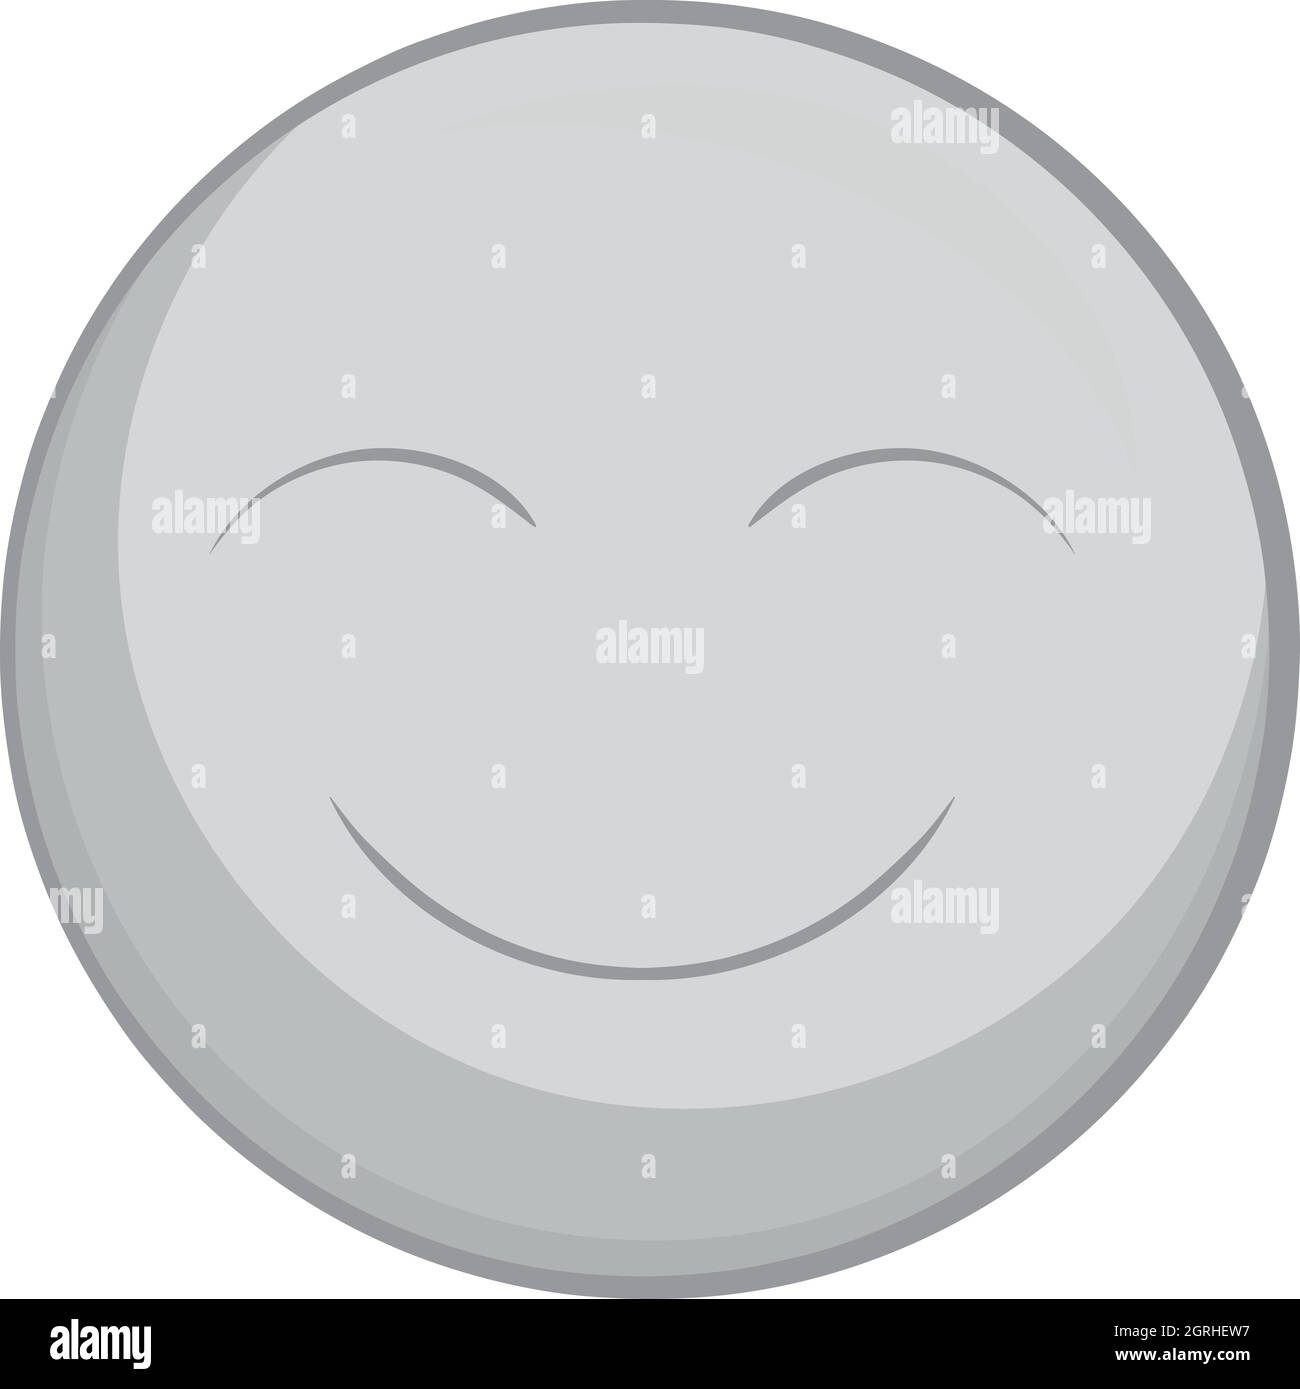 Smiley face icon, black monochrome style Stock Vector